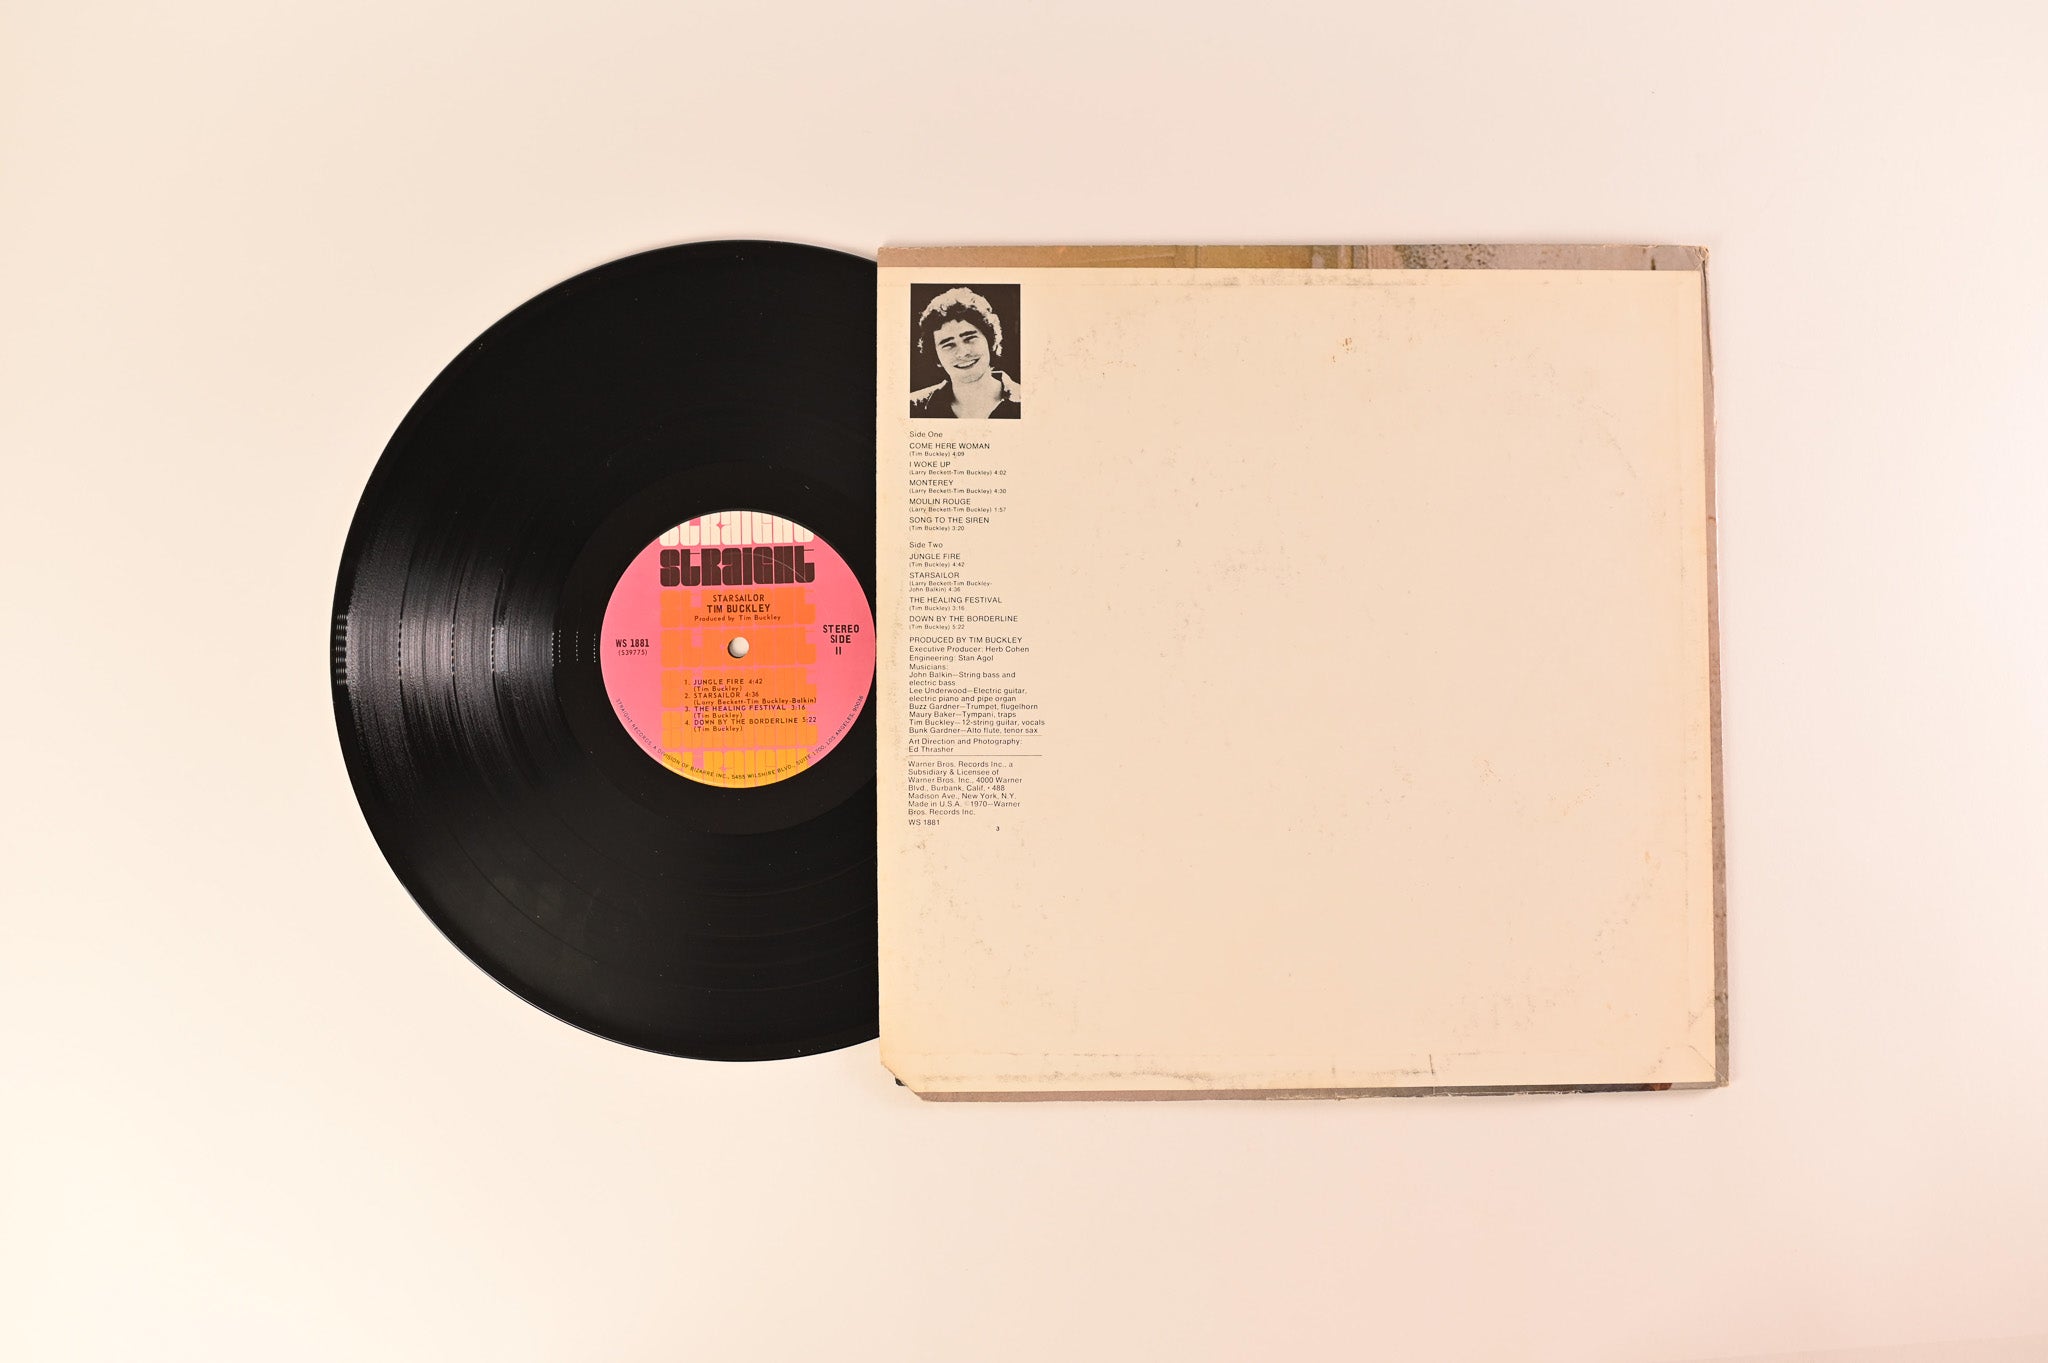 Tim Buckley - Starsailor on Straight/Warner Bros. Records